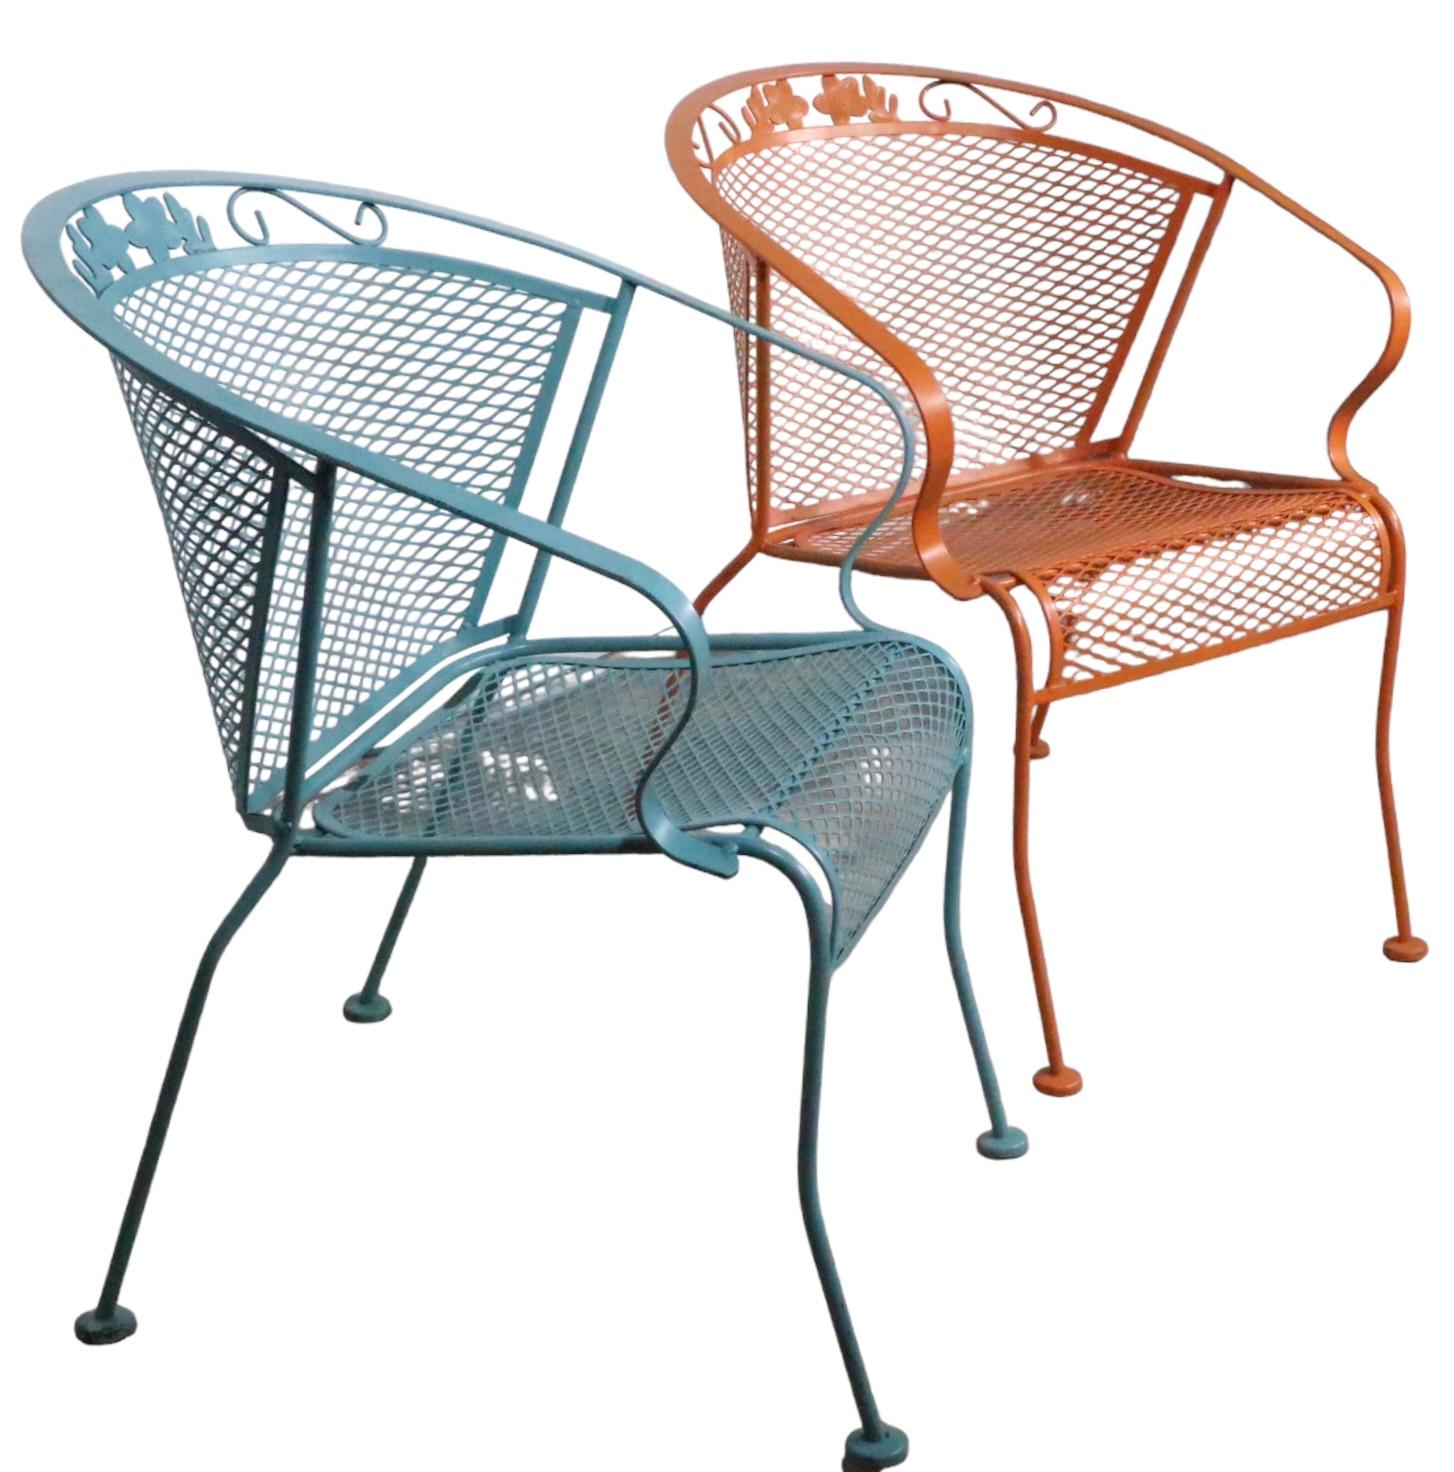 Set of Three Multi Colored Vintage Garden Patio Poolside Chairs Att. Salterini For Sale 1